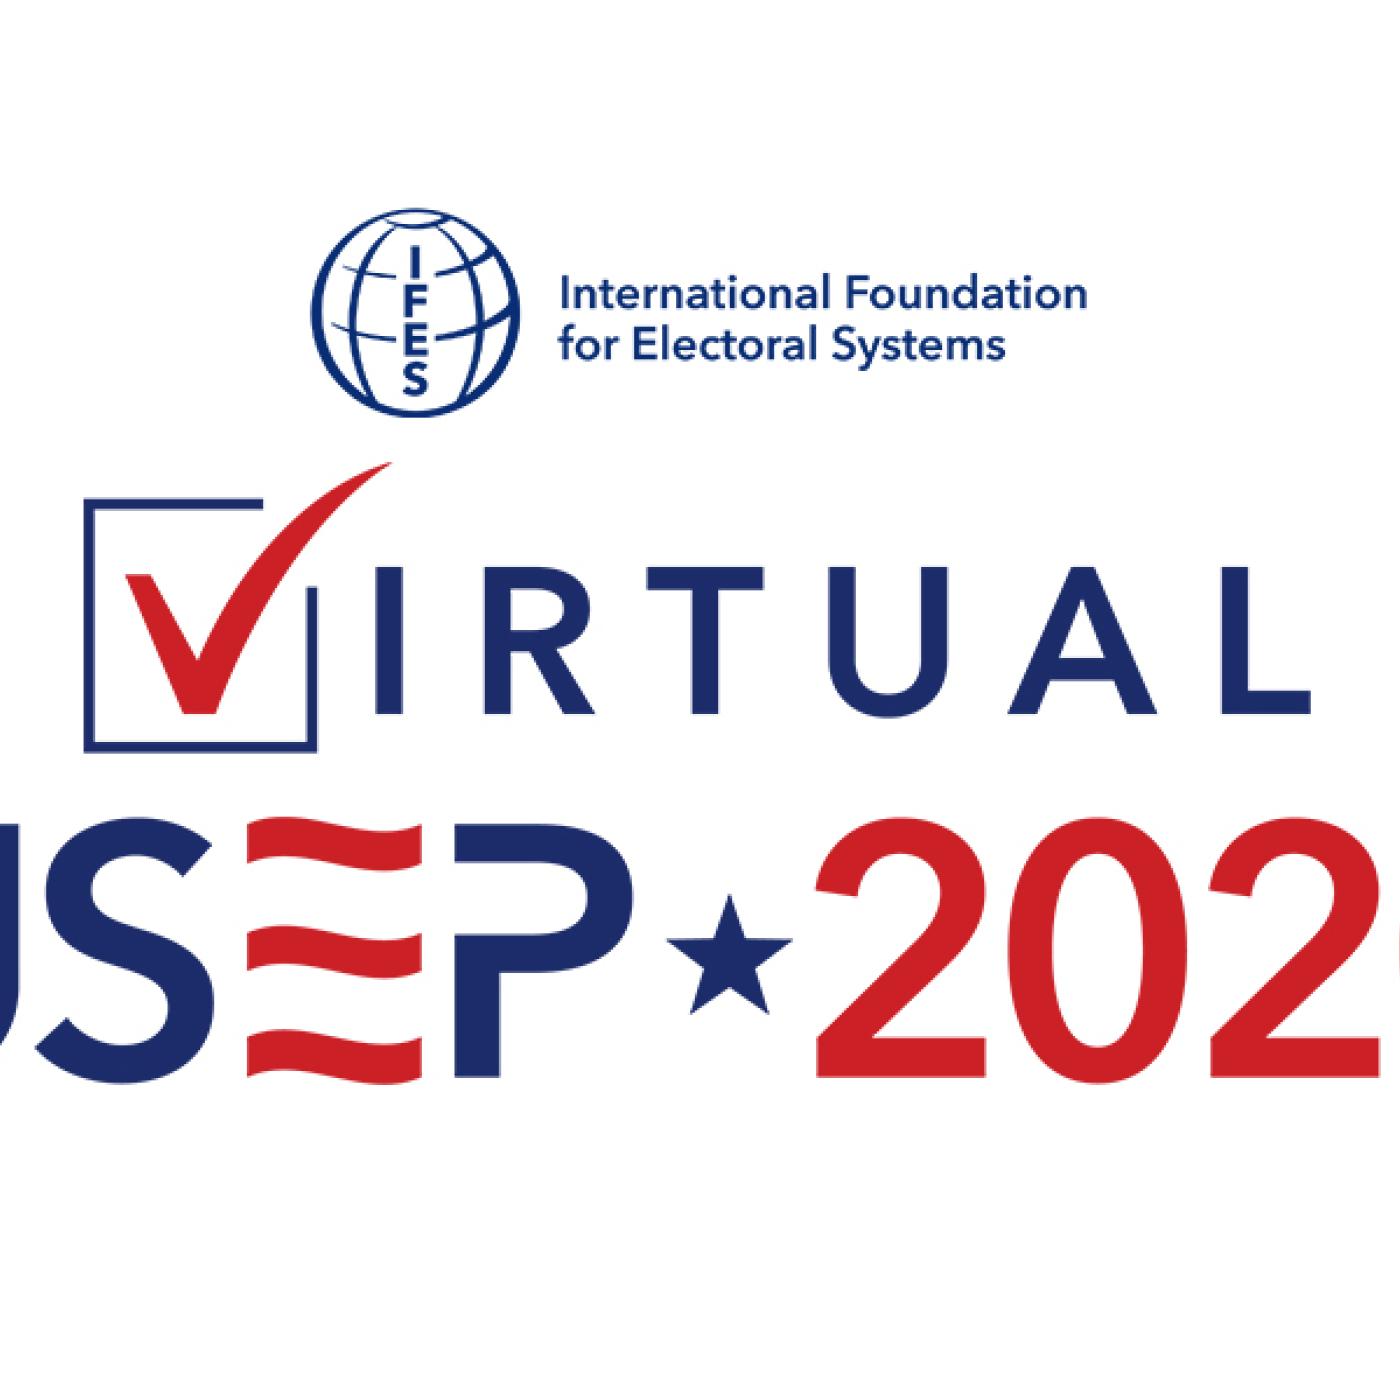 Virtual USEP 2020 logo + IFES logo